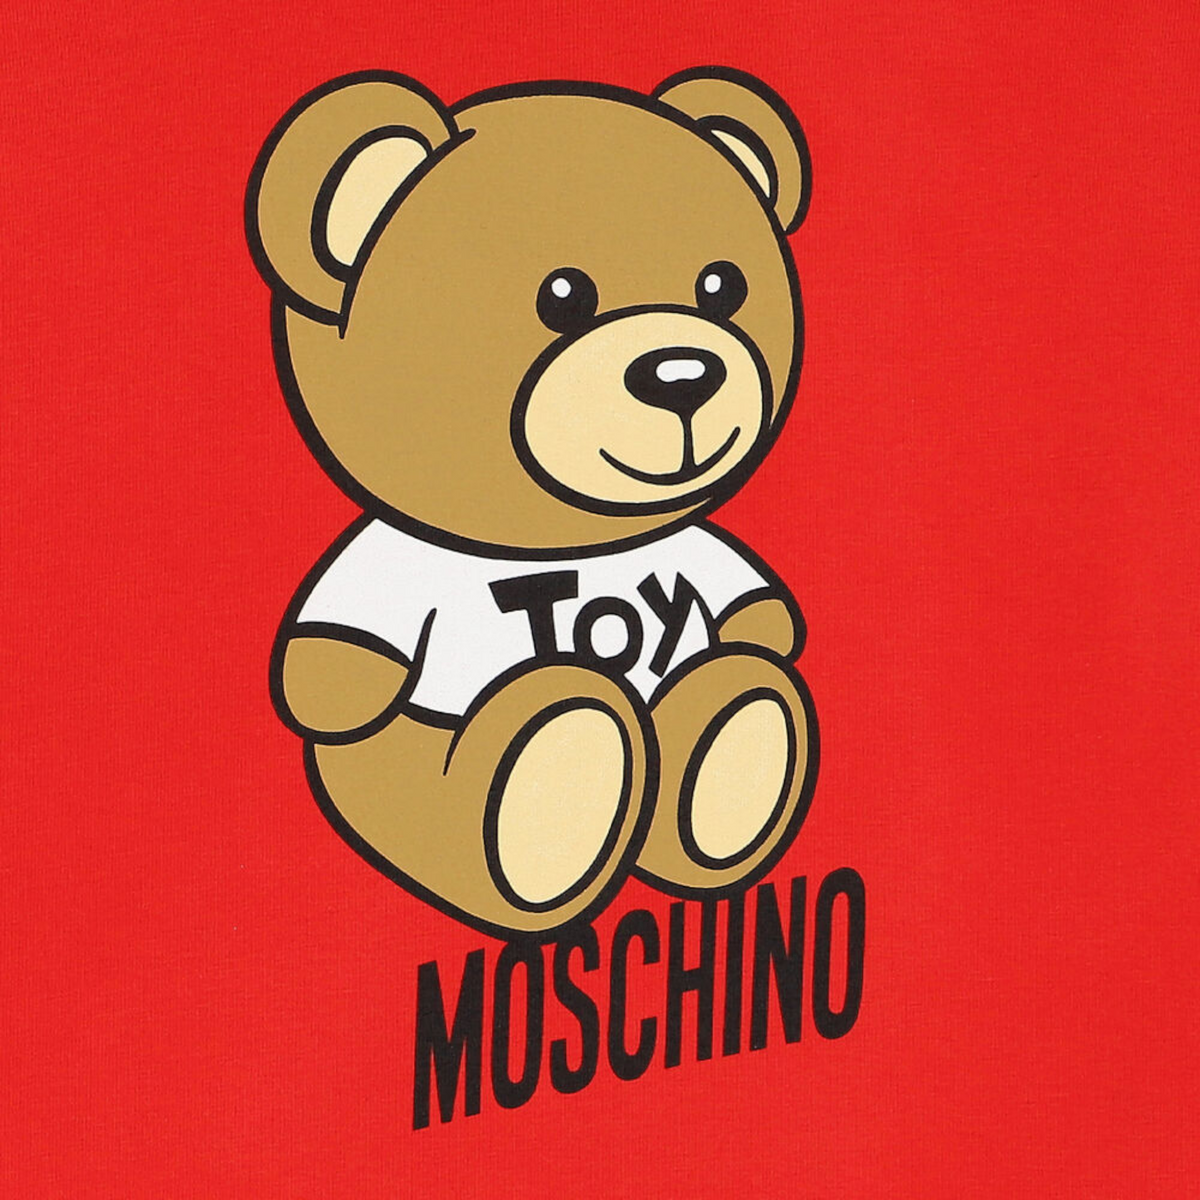 Moschino Kids Toy Bear Logo T-Shirt